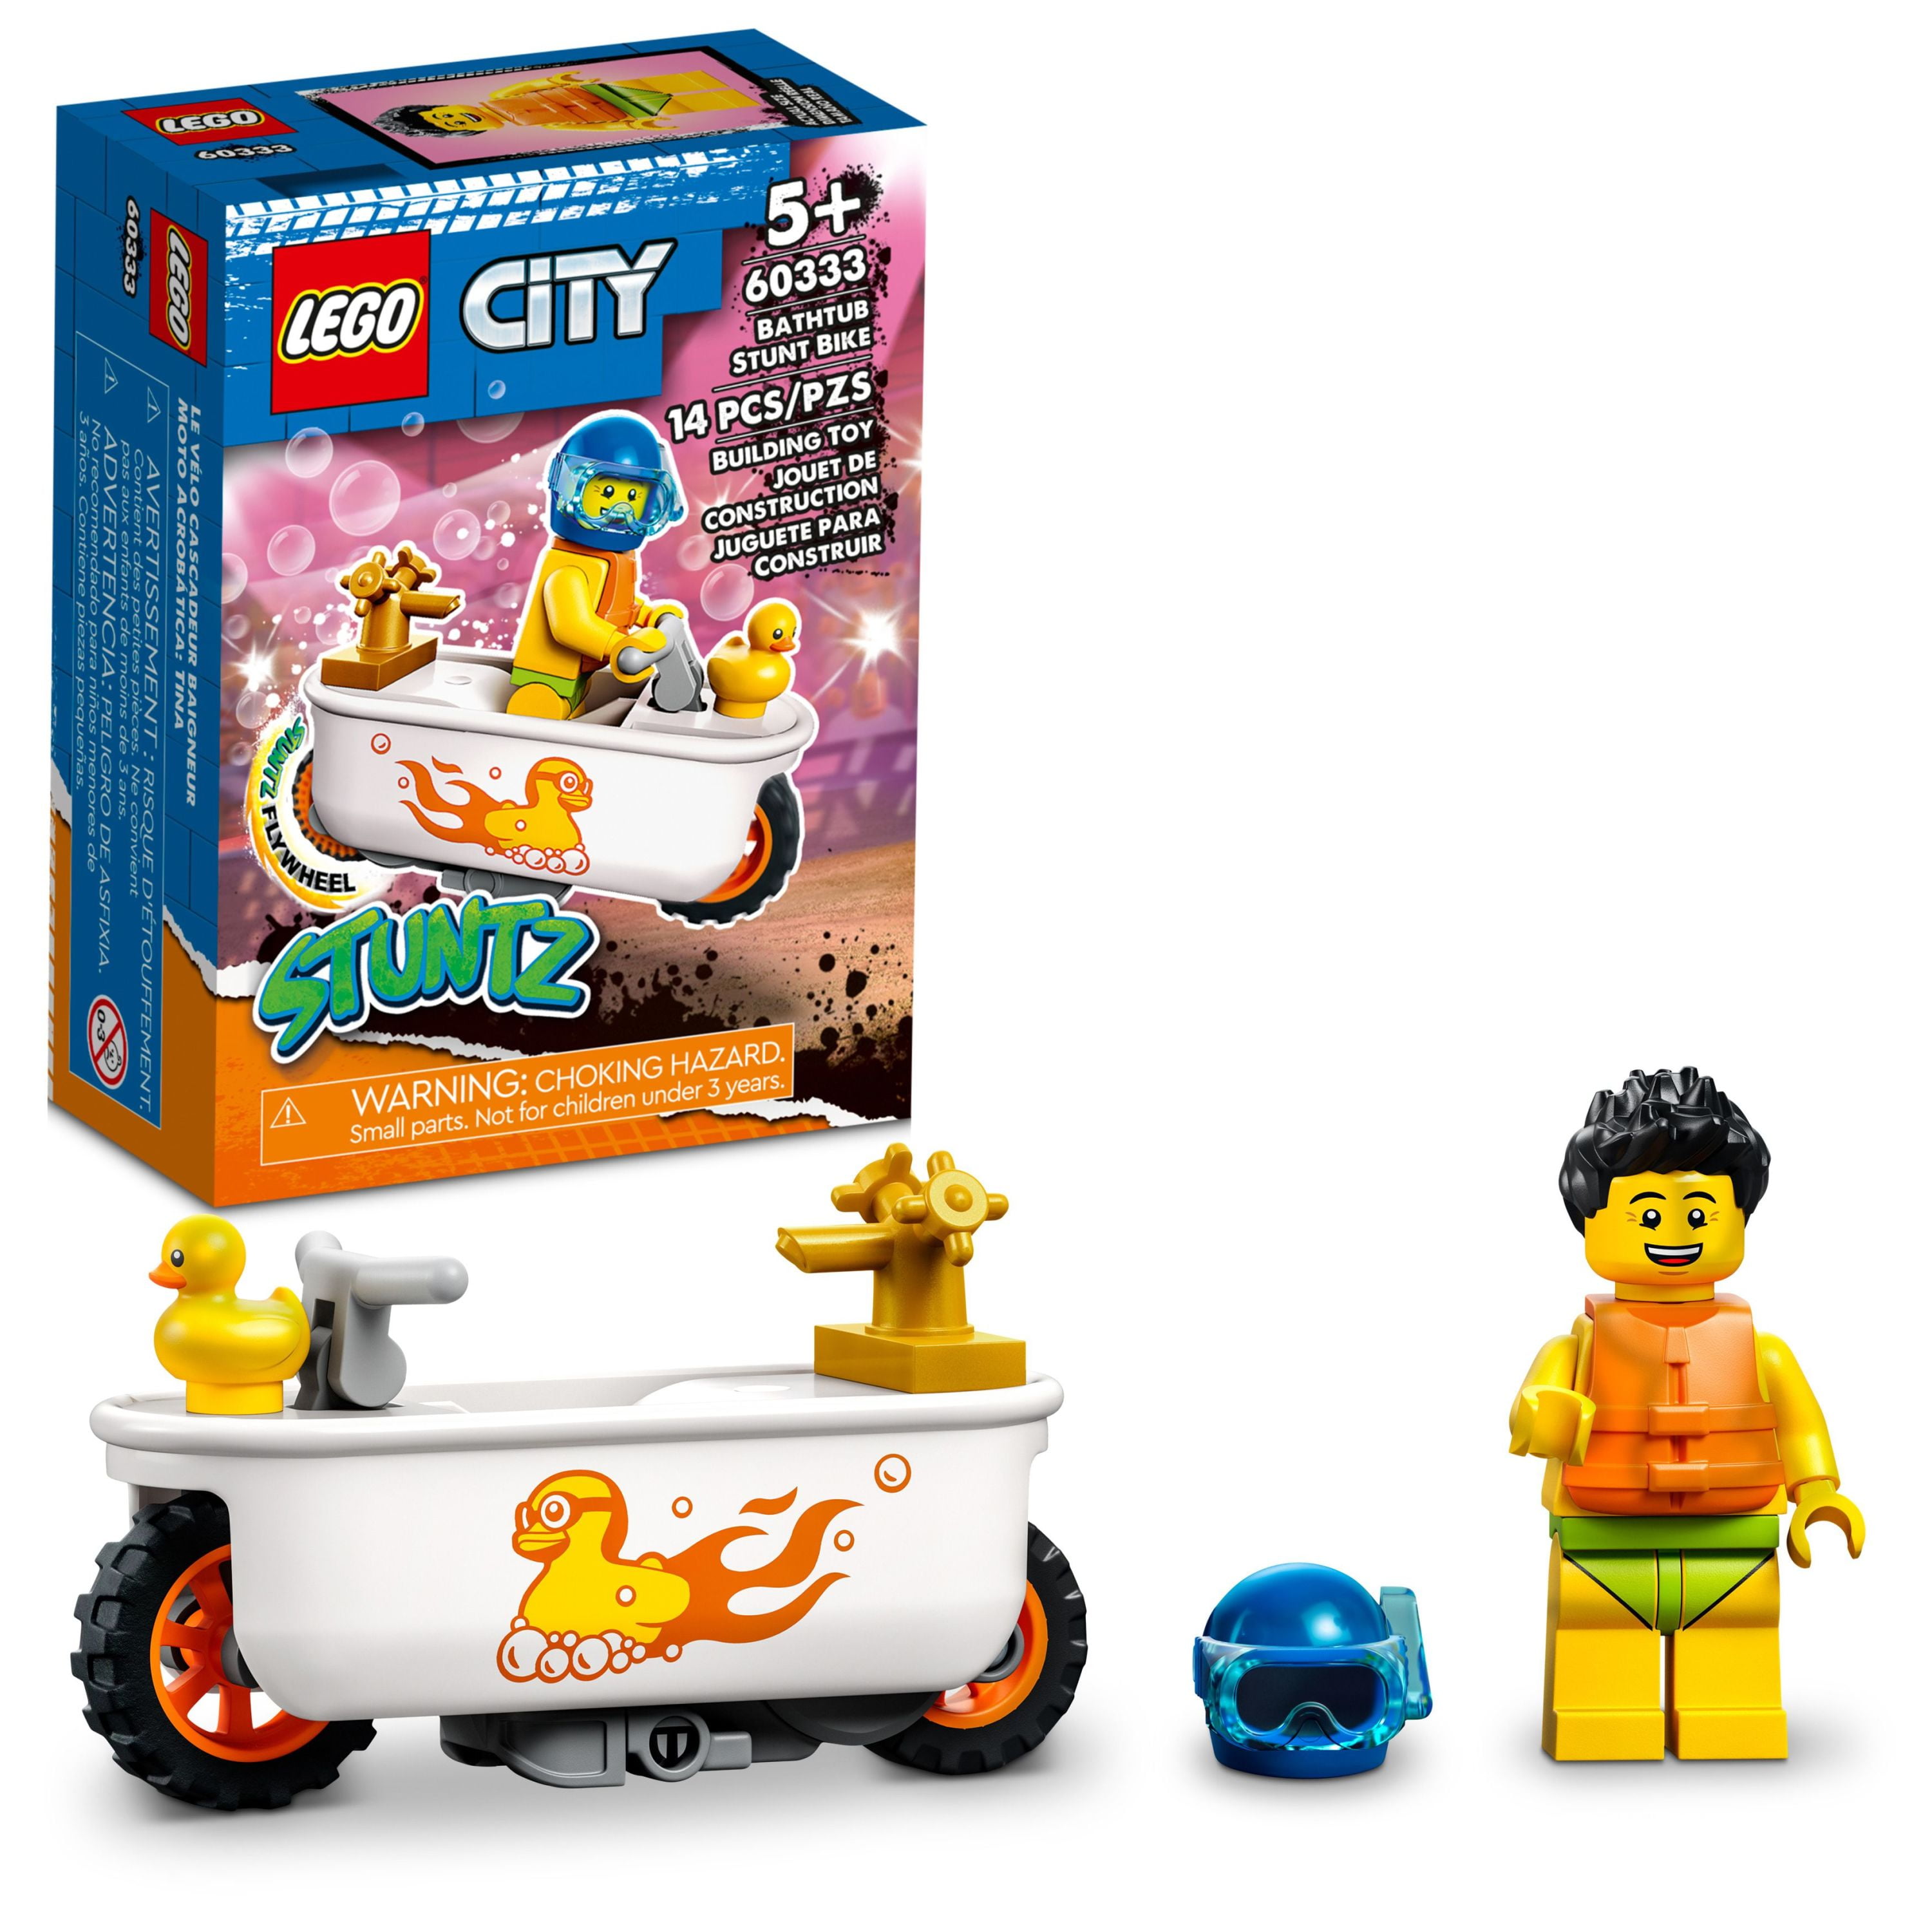 LEGO City Stuntz Bathtub Stunt Bike Set 60333 with Flywheel-Powered Toy motorcycle and Racer Minifigure, Small Gift Idea for Kids Aged 5 Plus